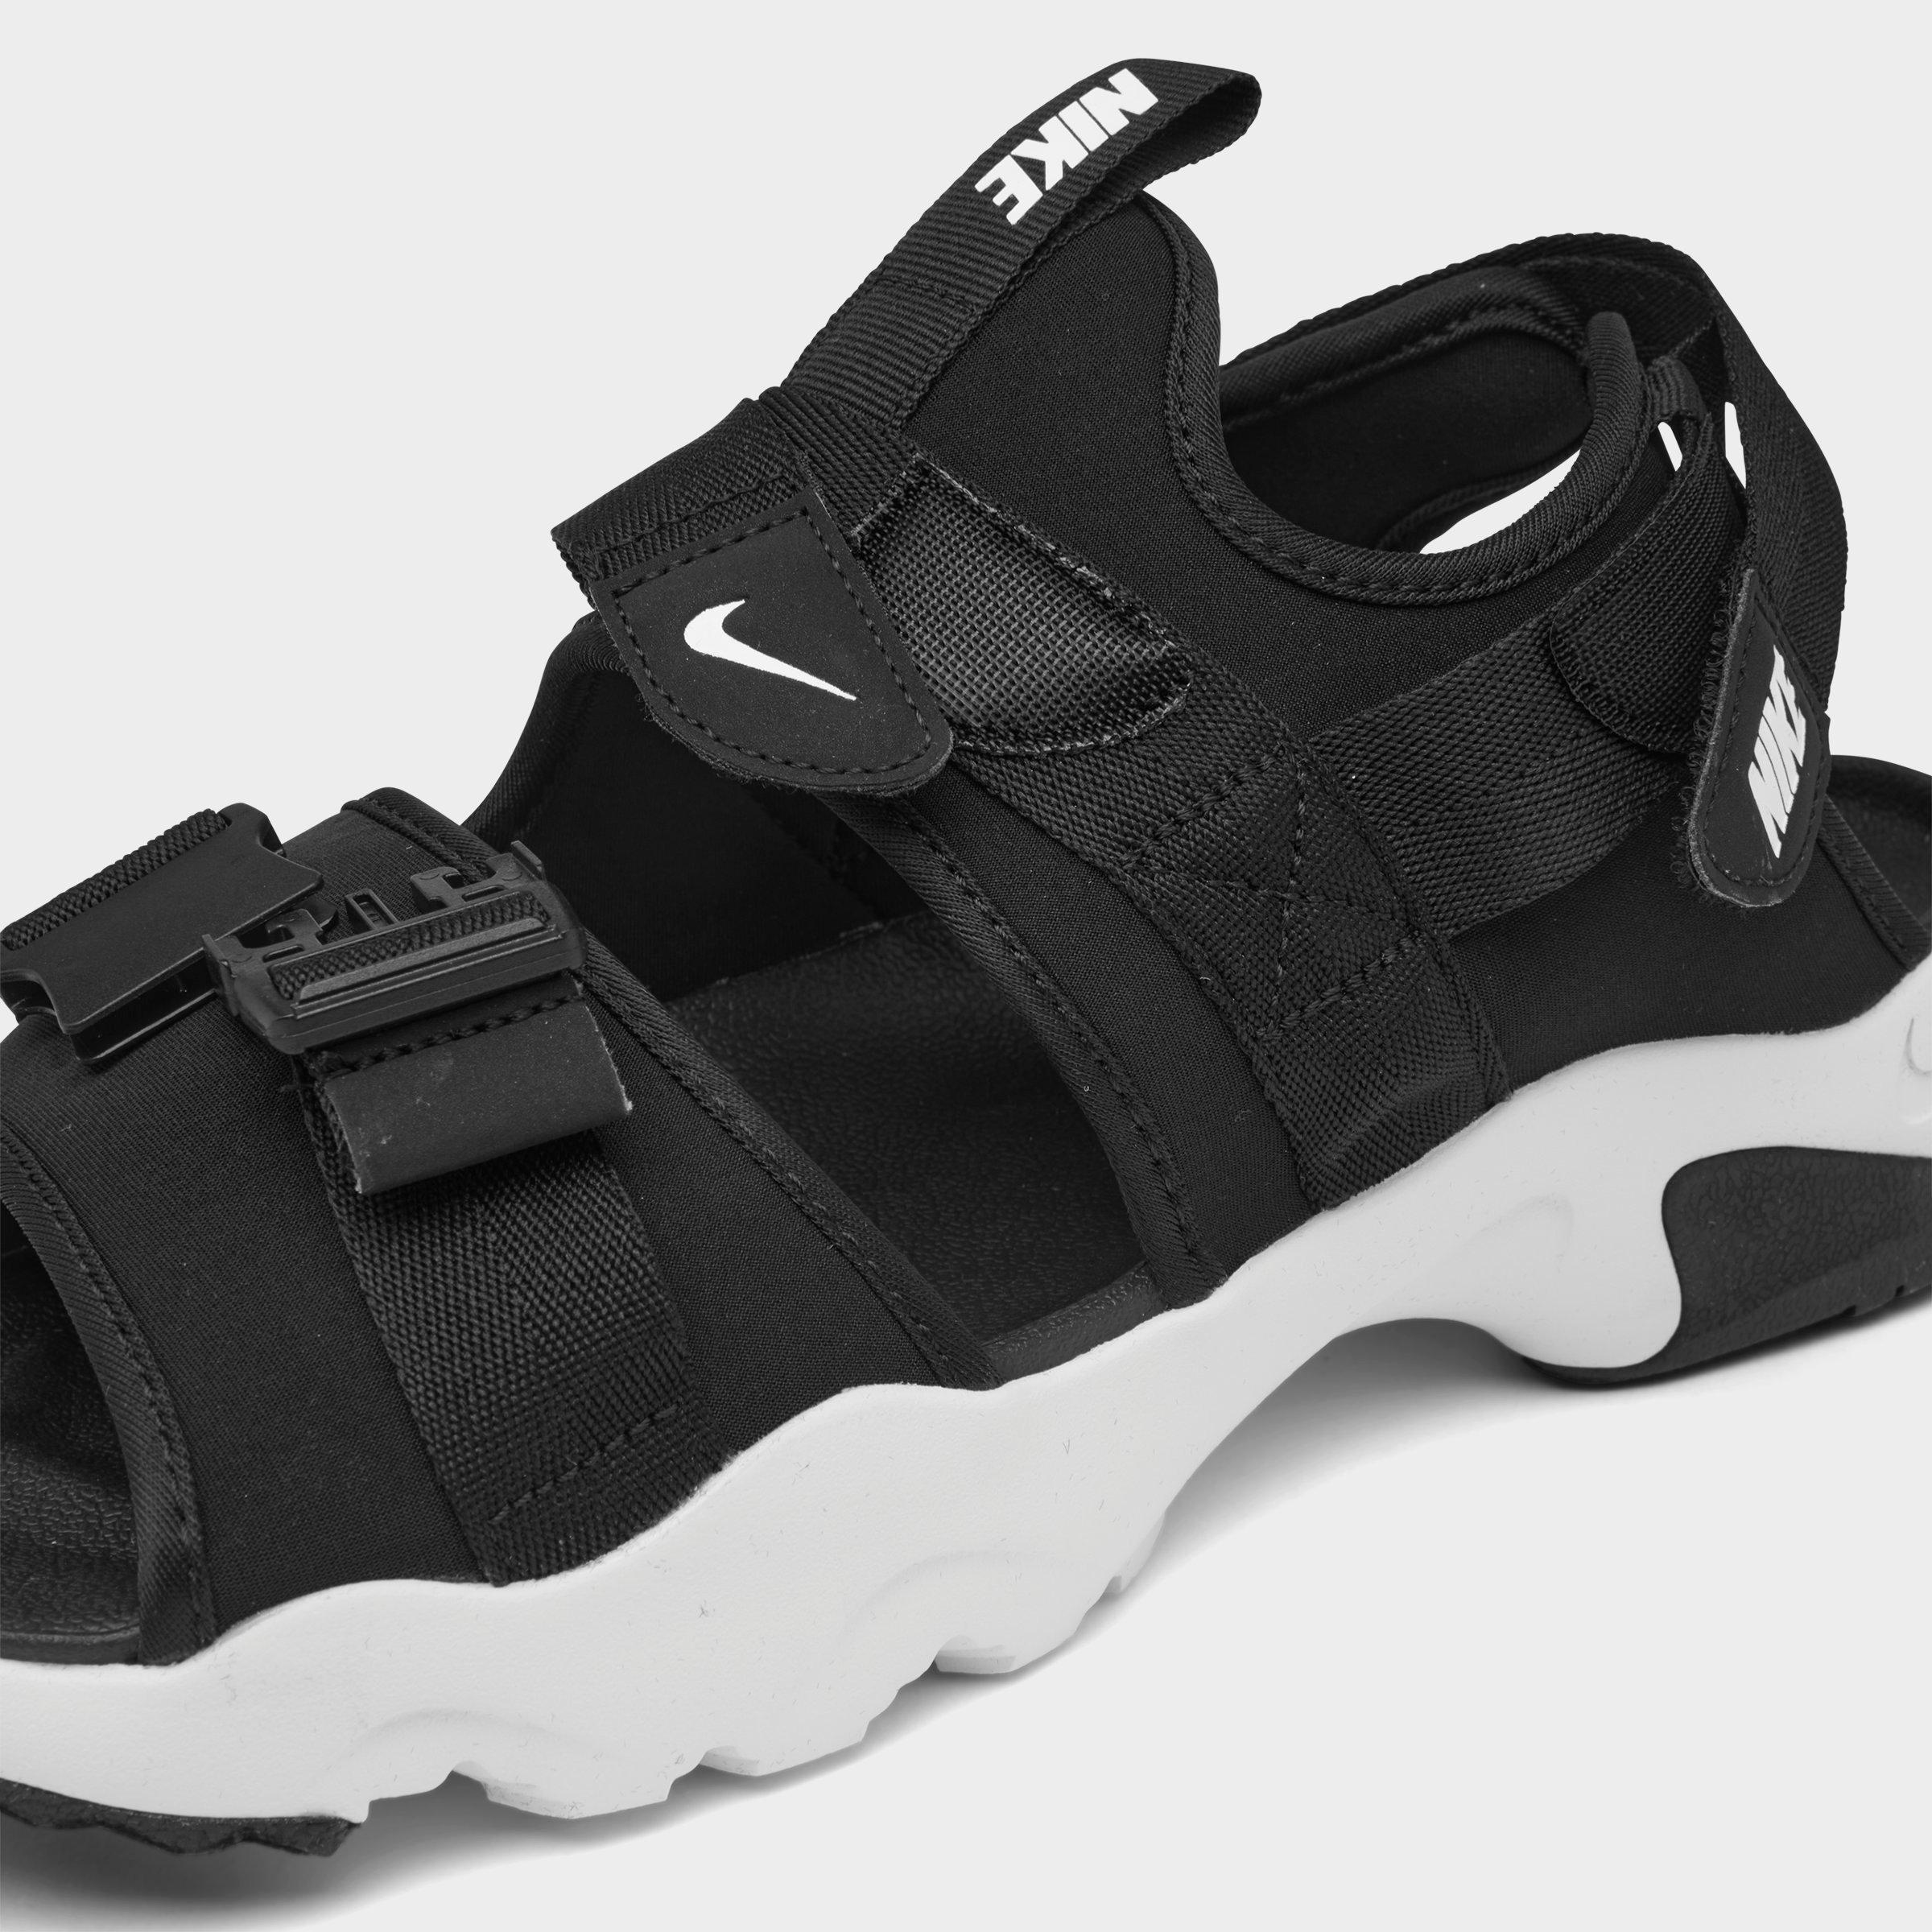 men's nike canyon adjustable strap sandals